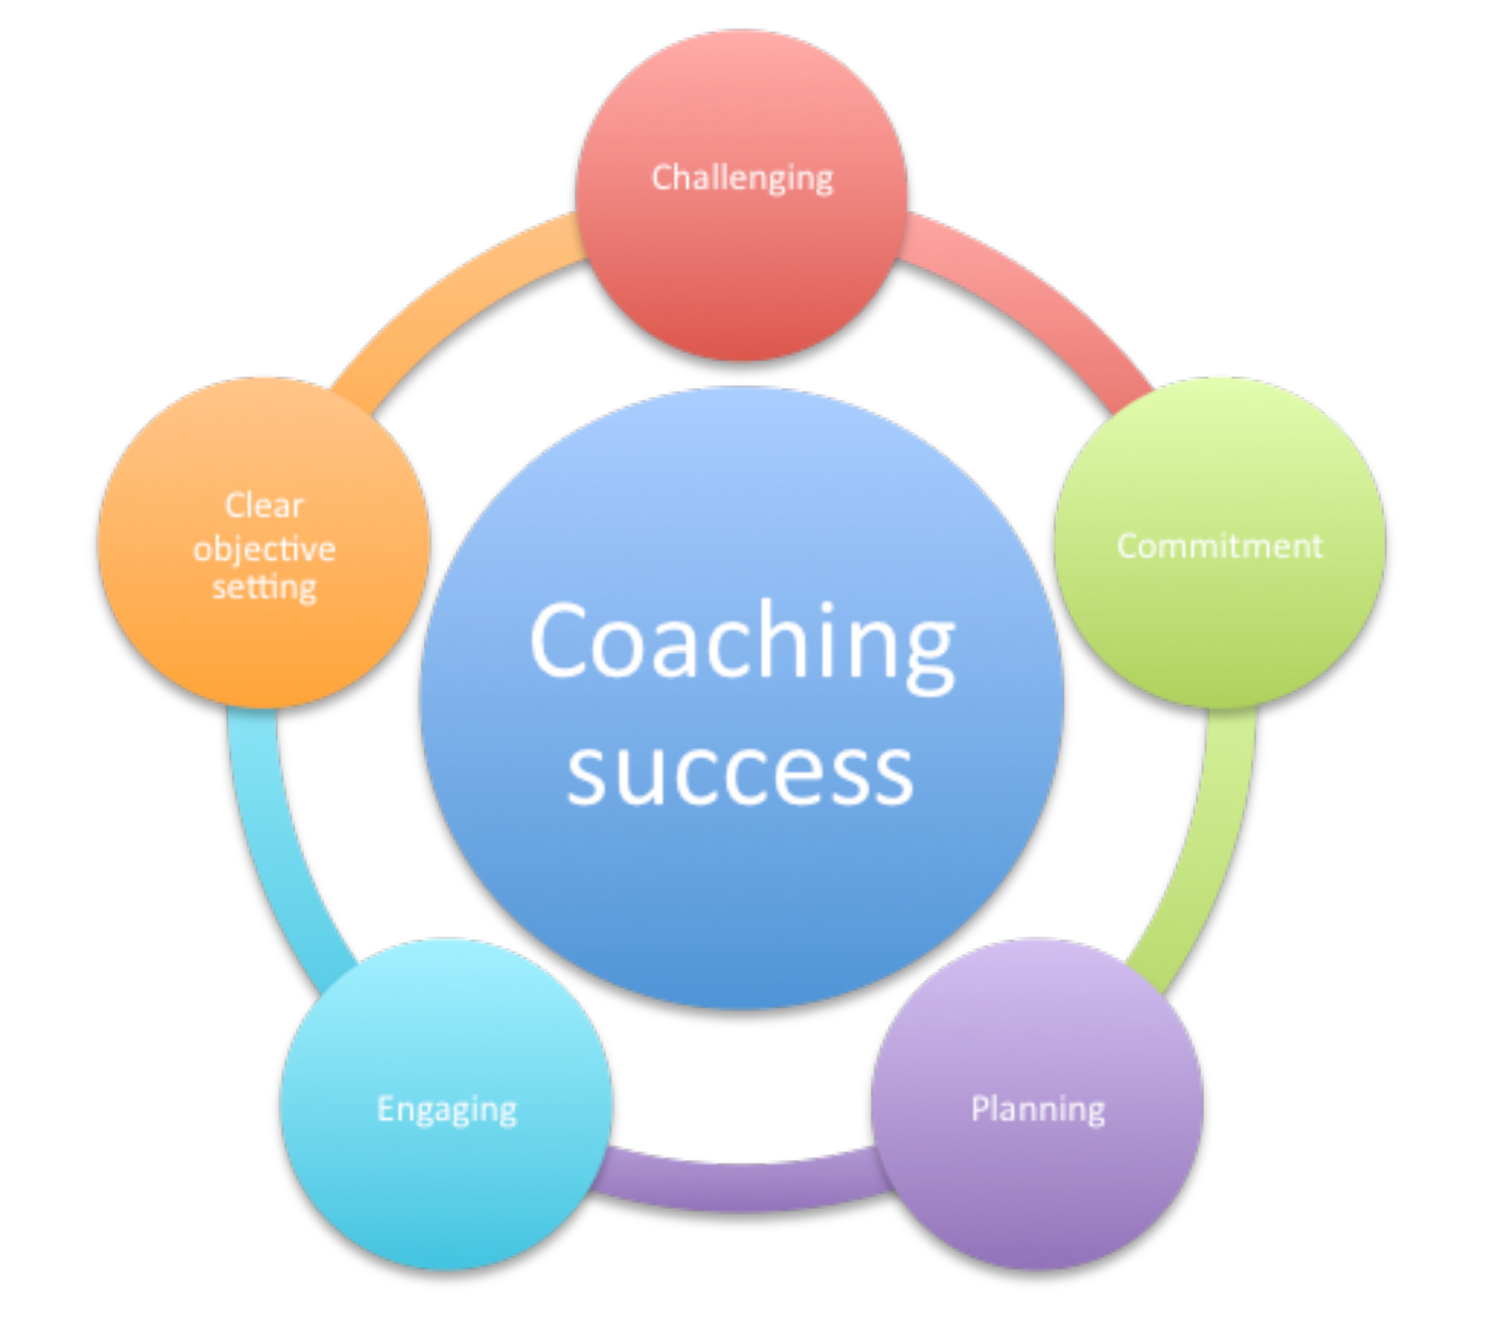 coaching for success